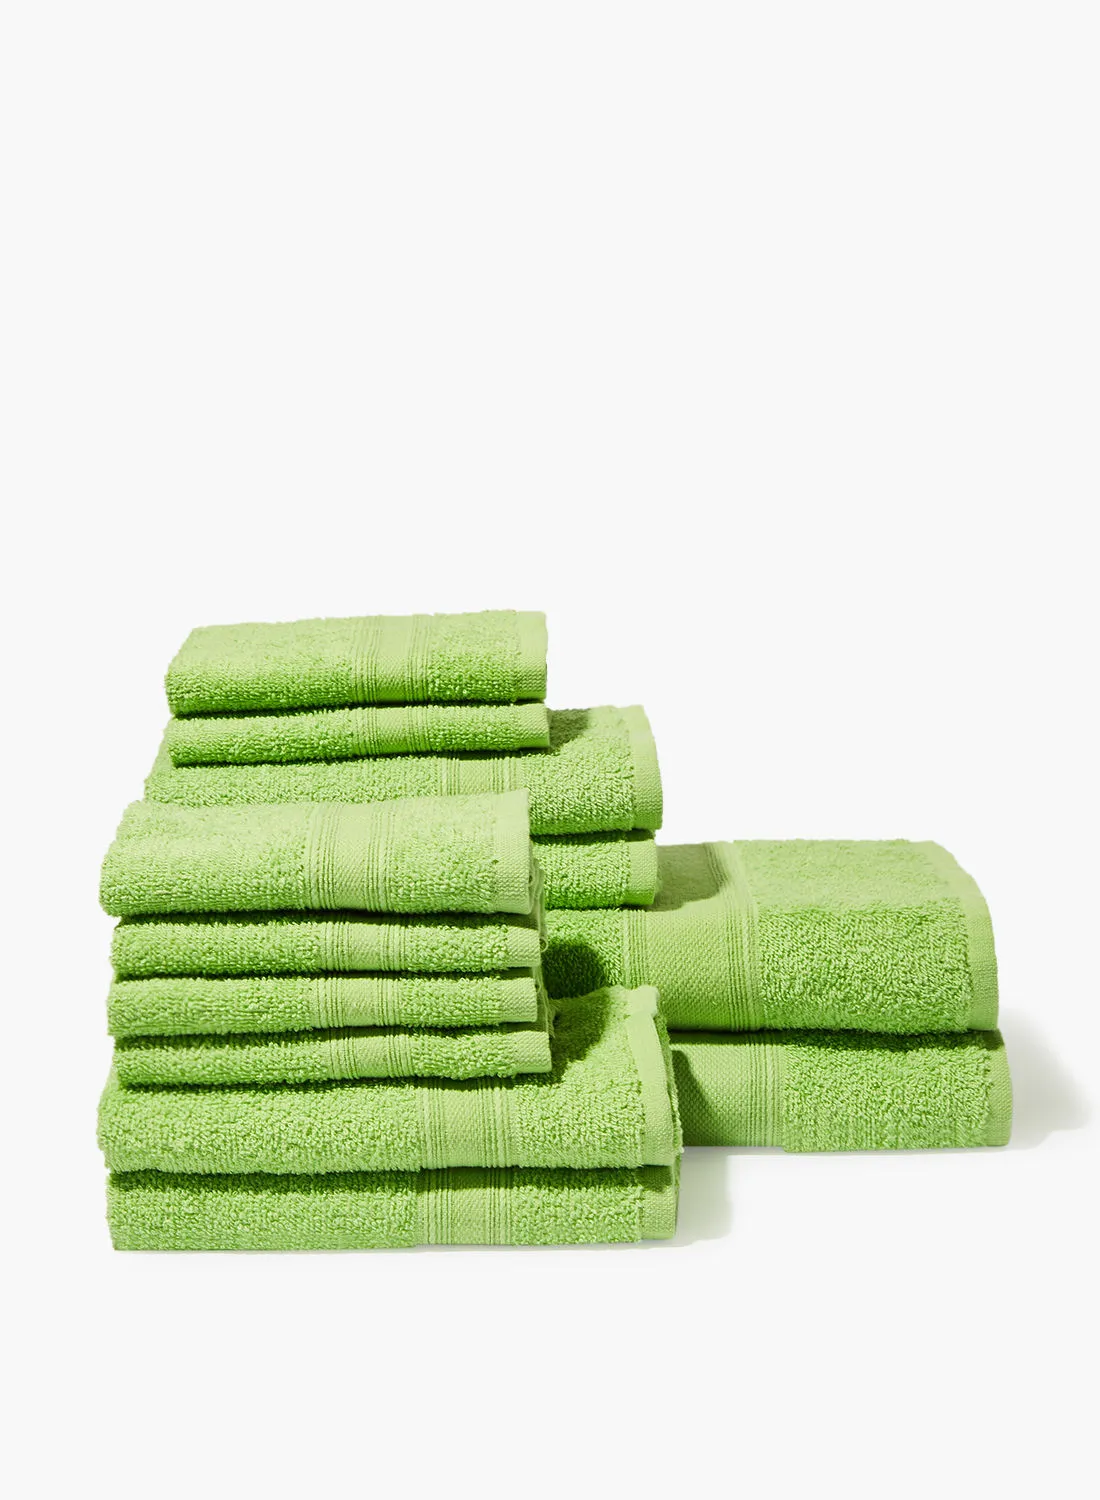 Amal 12 Piece Bathroom Towel Set - 400 GSM 100% Cotton Terry - 4 Hand Towel - 6 Face Towel - 2 Bath Towel - Green_Apple Color -Quick Dry - Super Absorbent